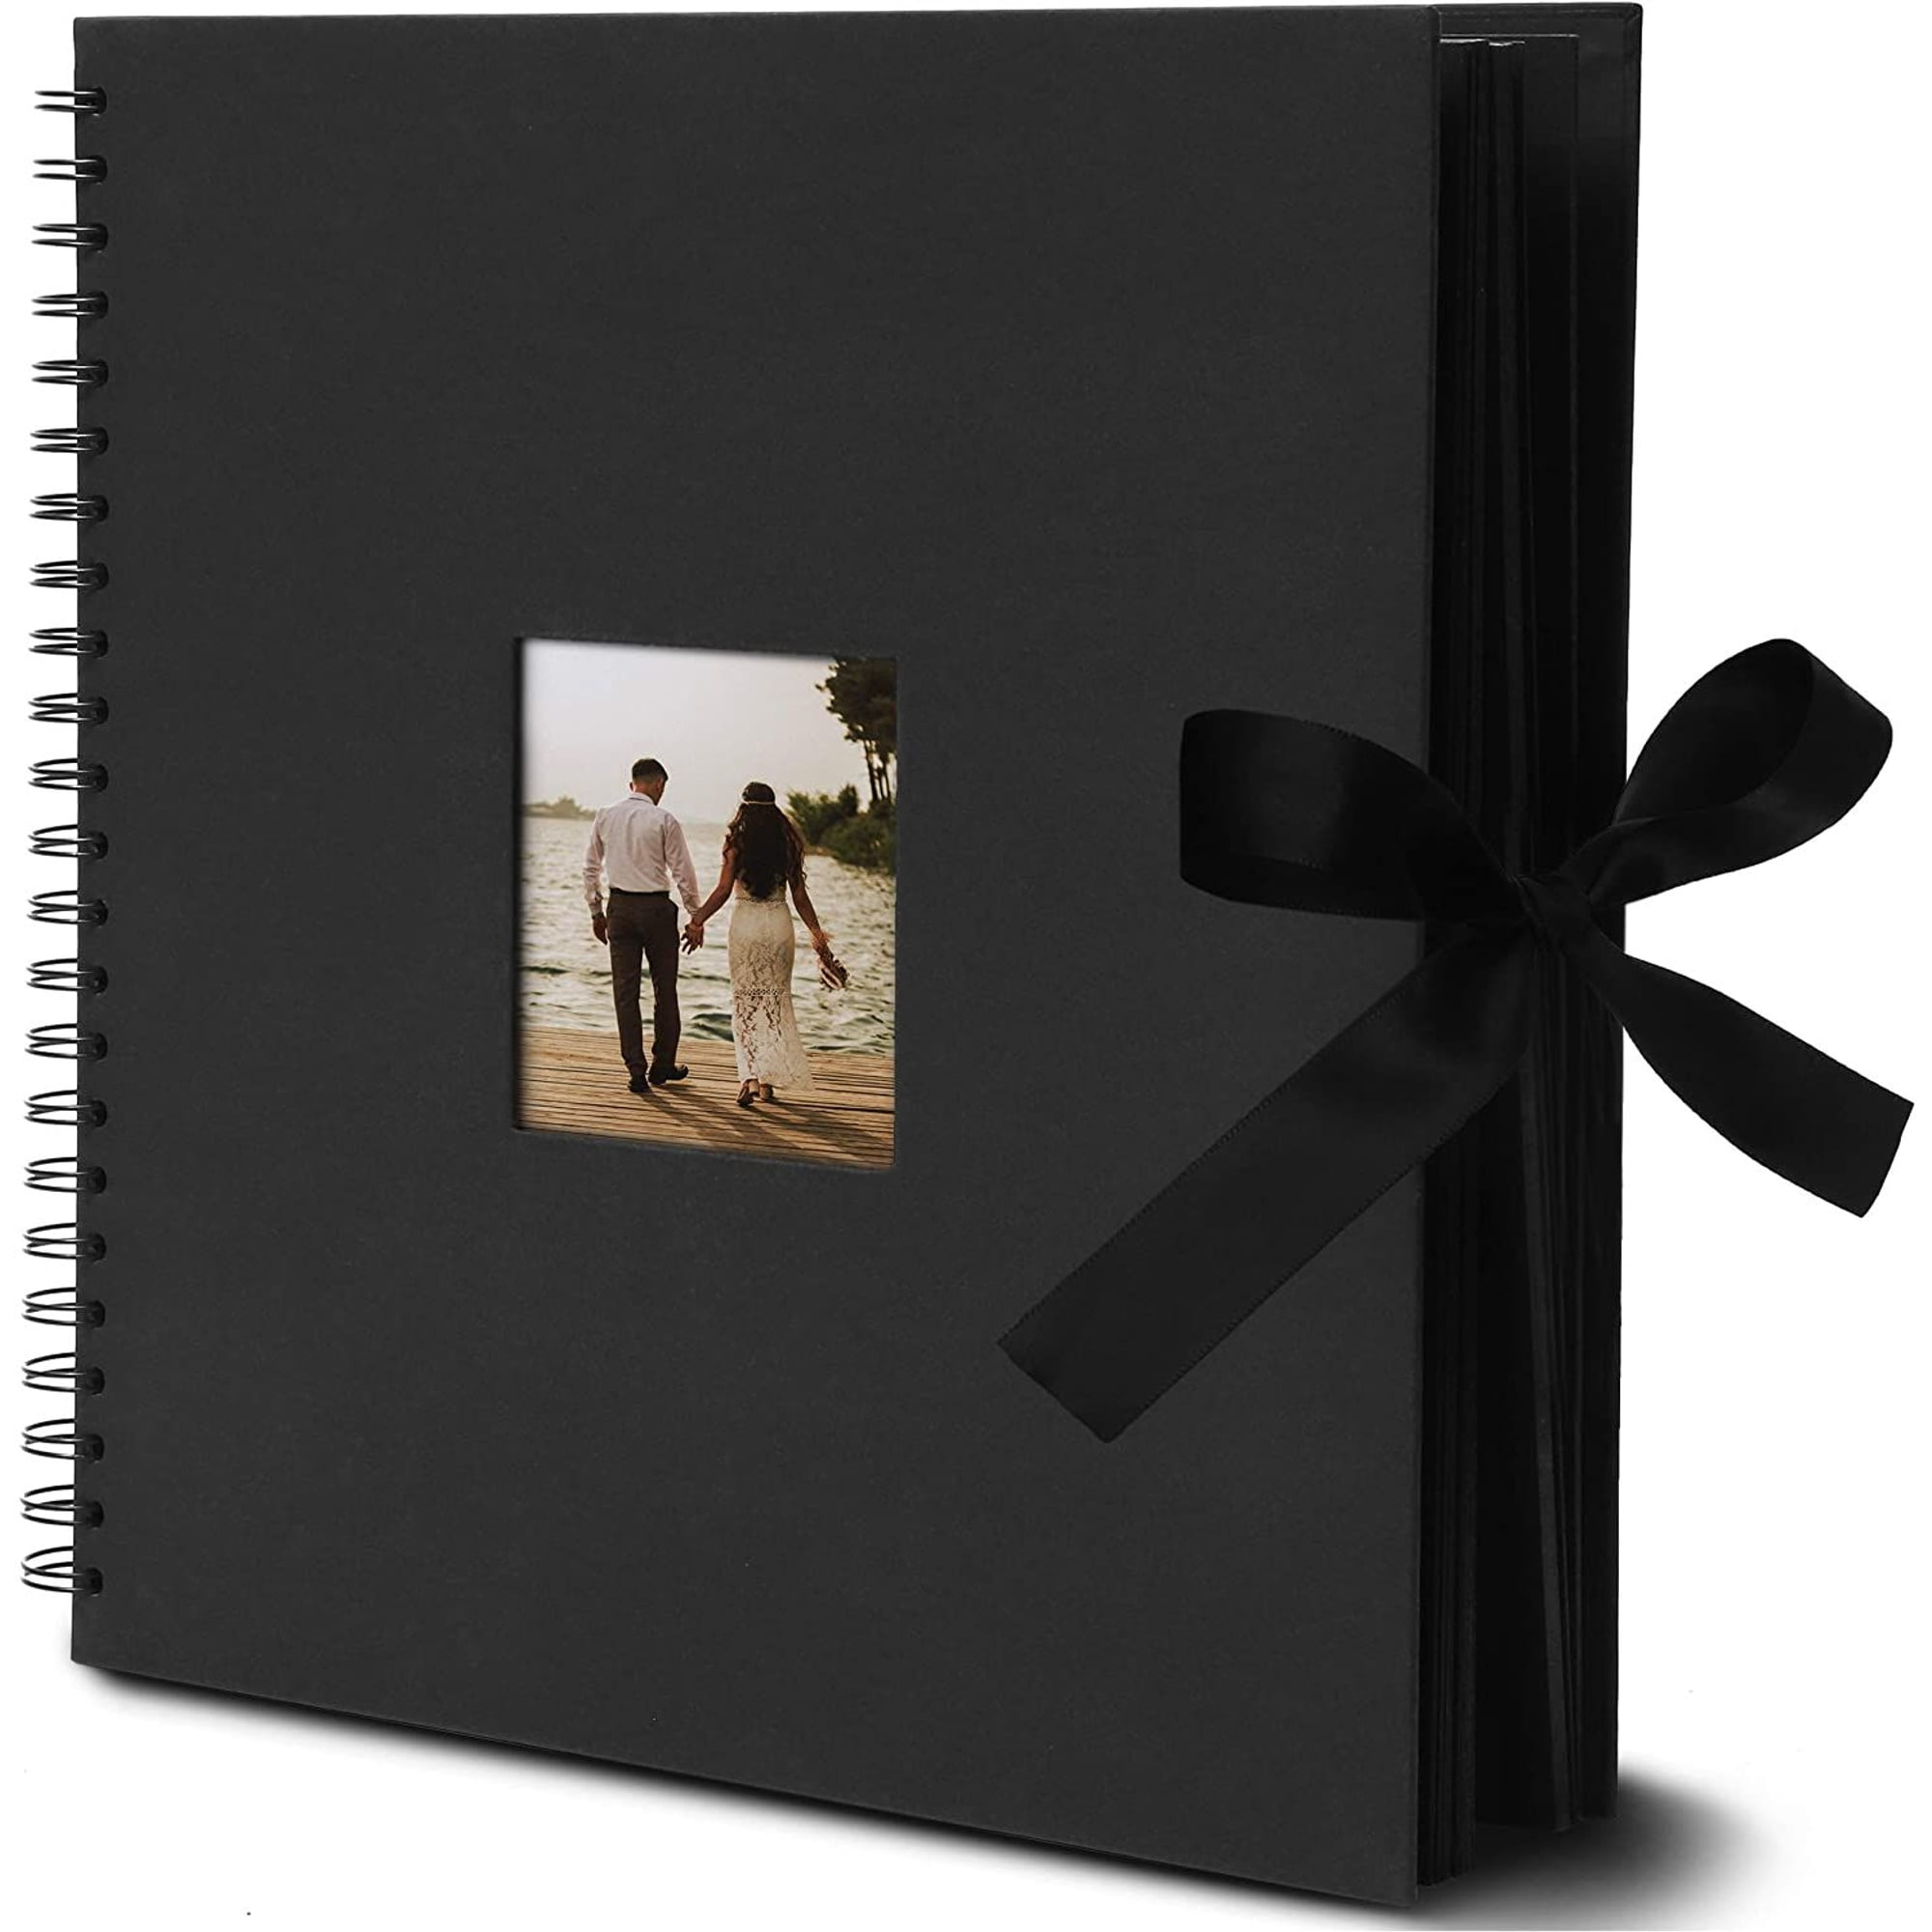 Buy Exclusive Line Super Photo Album Black - 300 Pictures in 11x15